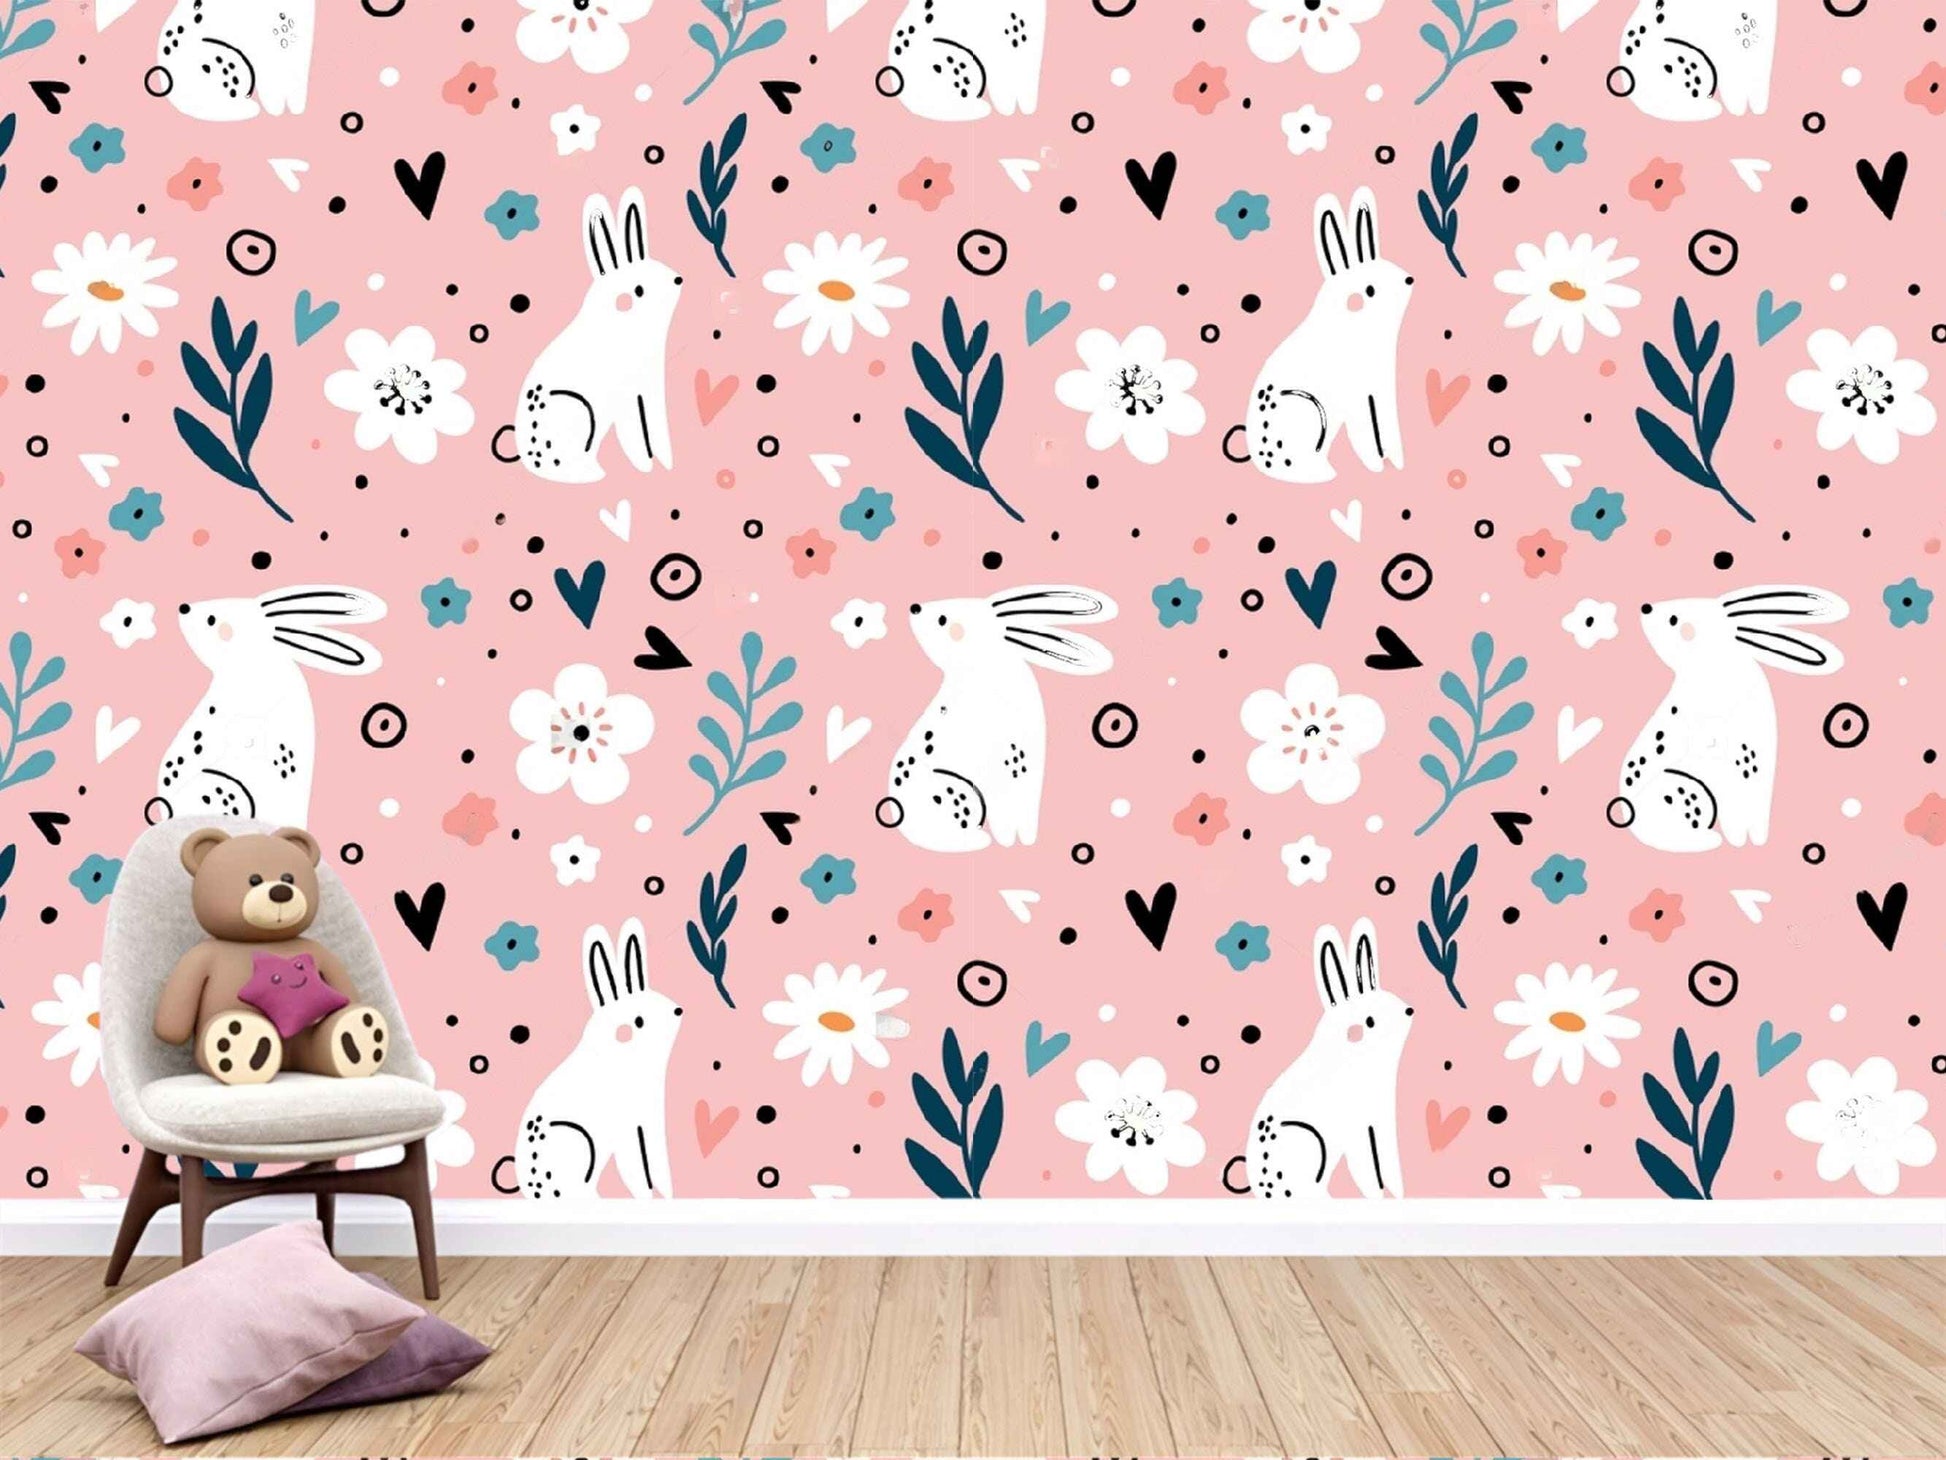 Playful bunny wall art in a nursery, inspiring imagination and creating a joyful atmosphere.